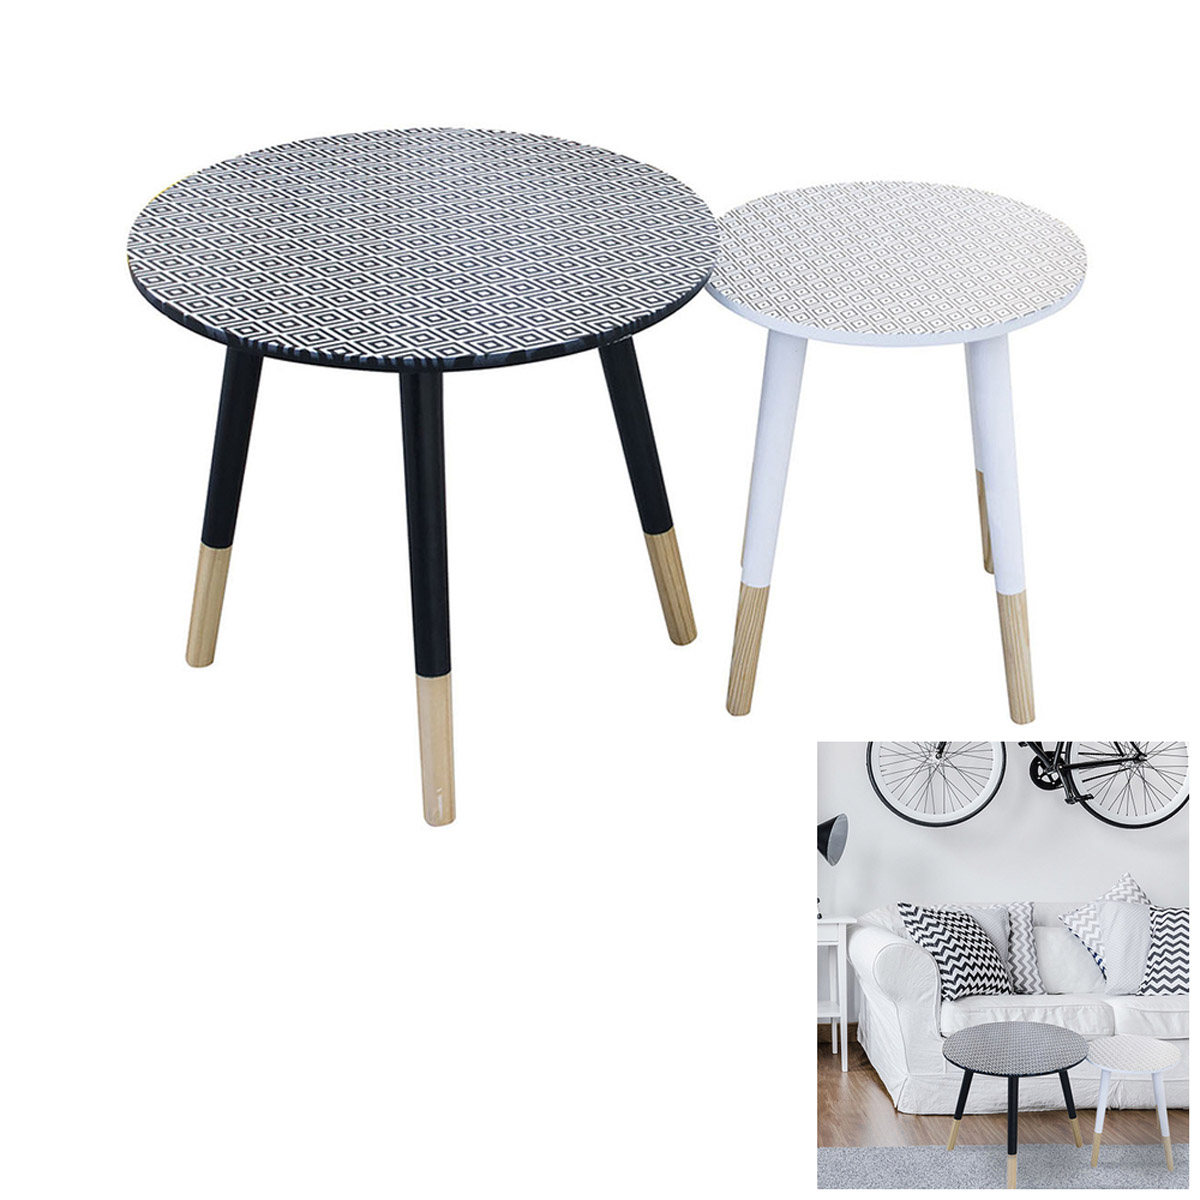 2 tables gigognes bois \'Boho\' noir blanc - 48 et 33 cm - [R2398]